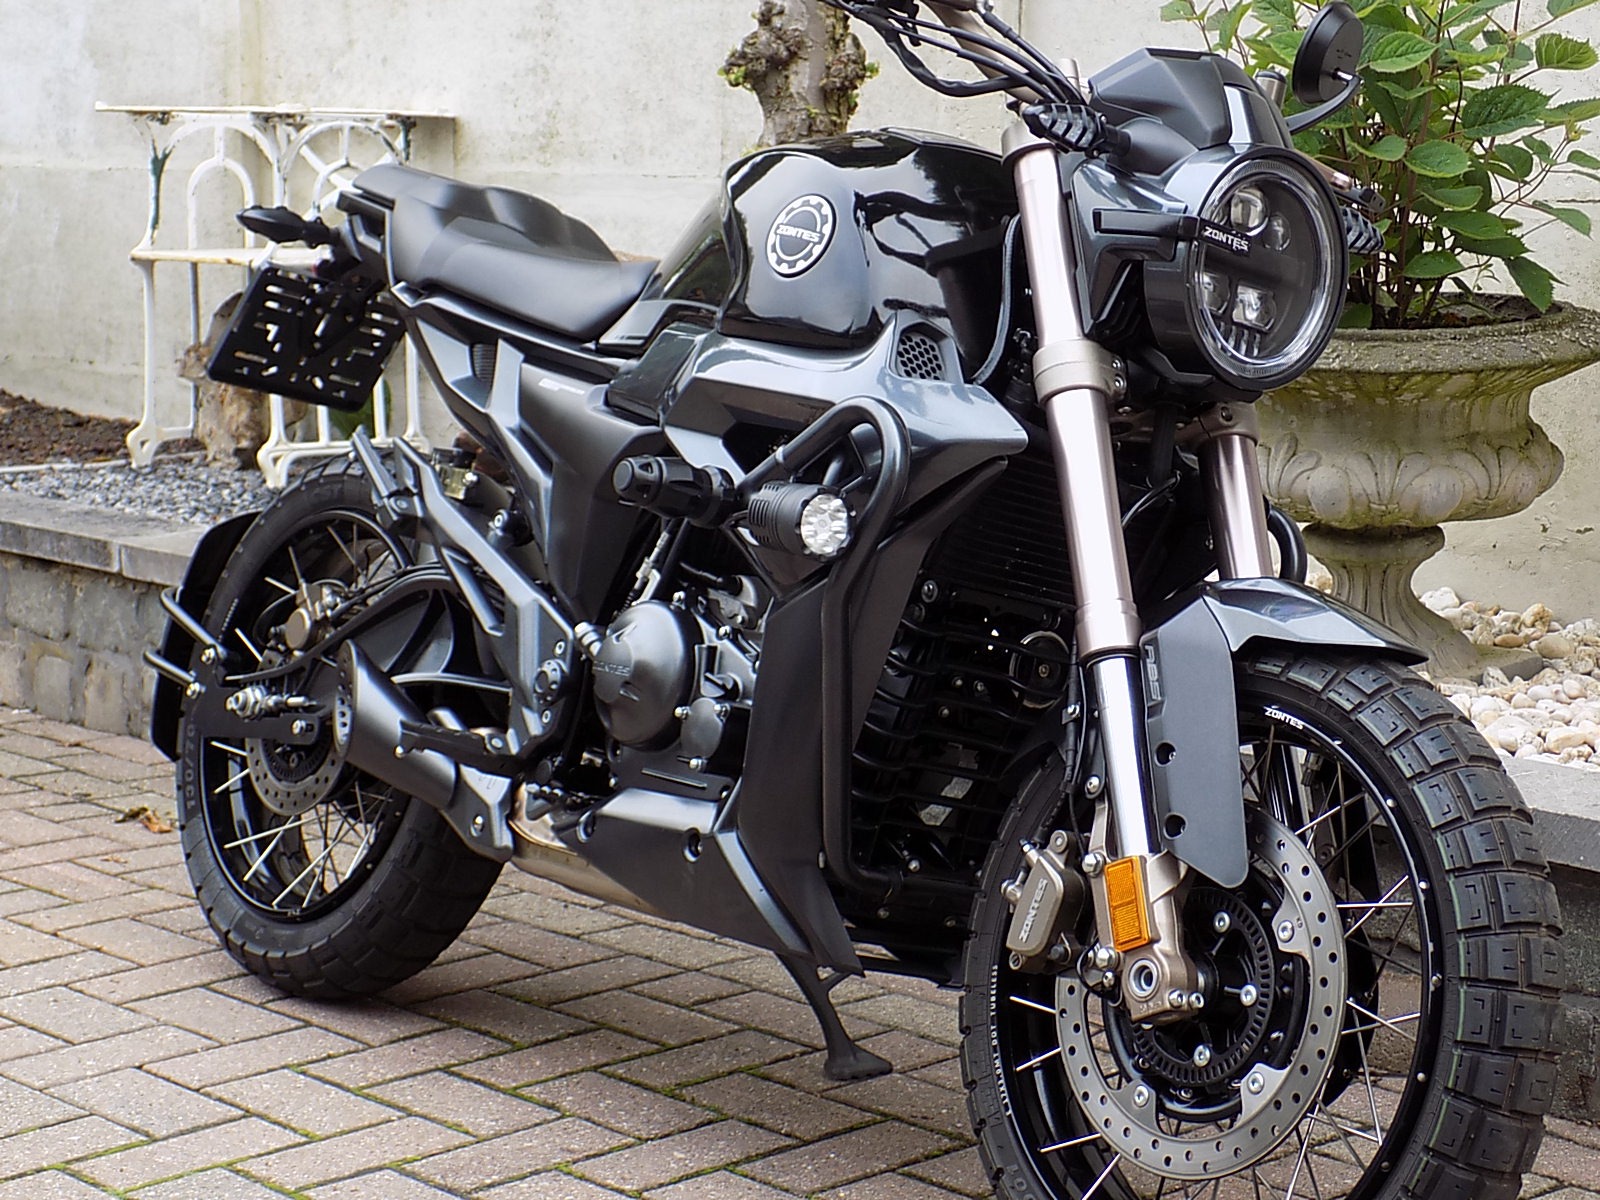 Je bekijkt nu Zontes G 125 cc scrambler moto (VERKOCHT)!!!